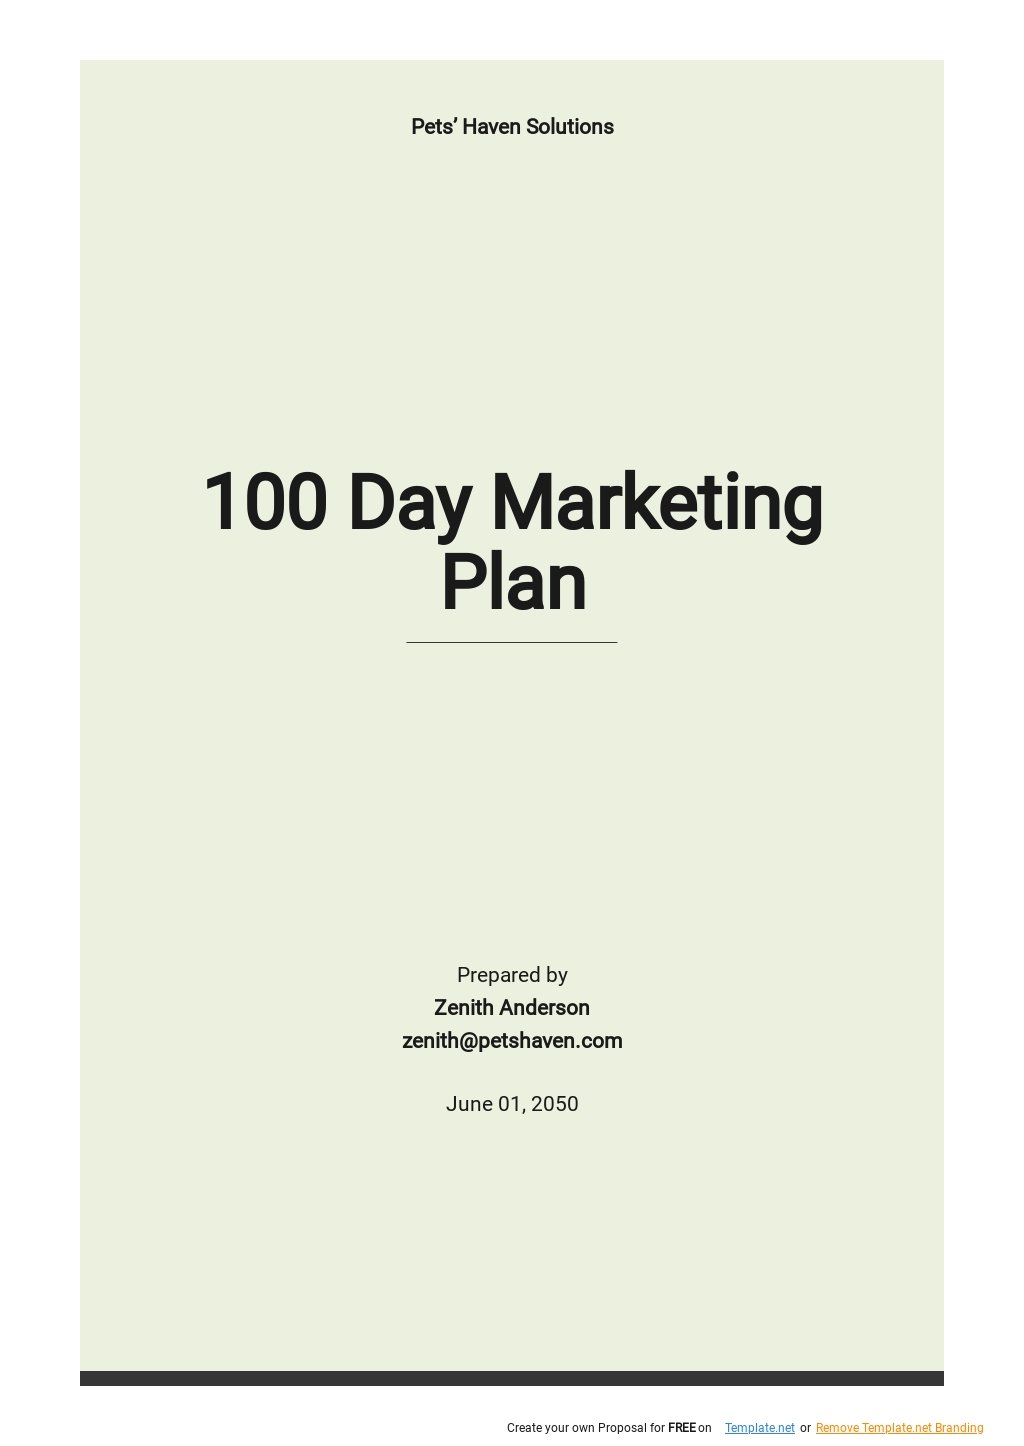 100 Day Marketing Plan Template.jpe